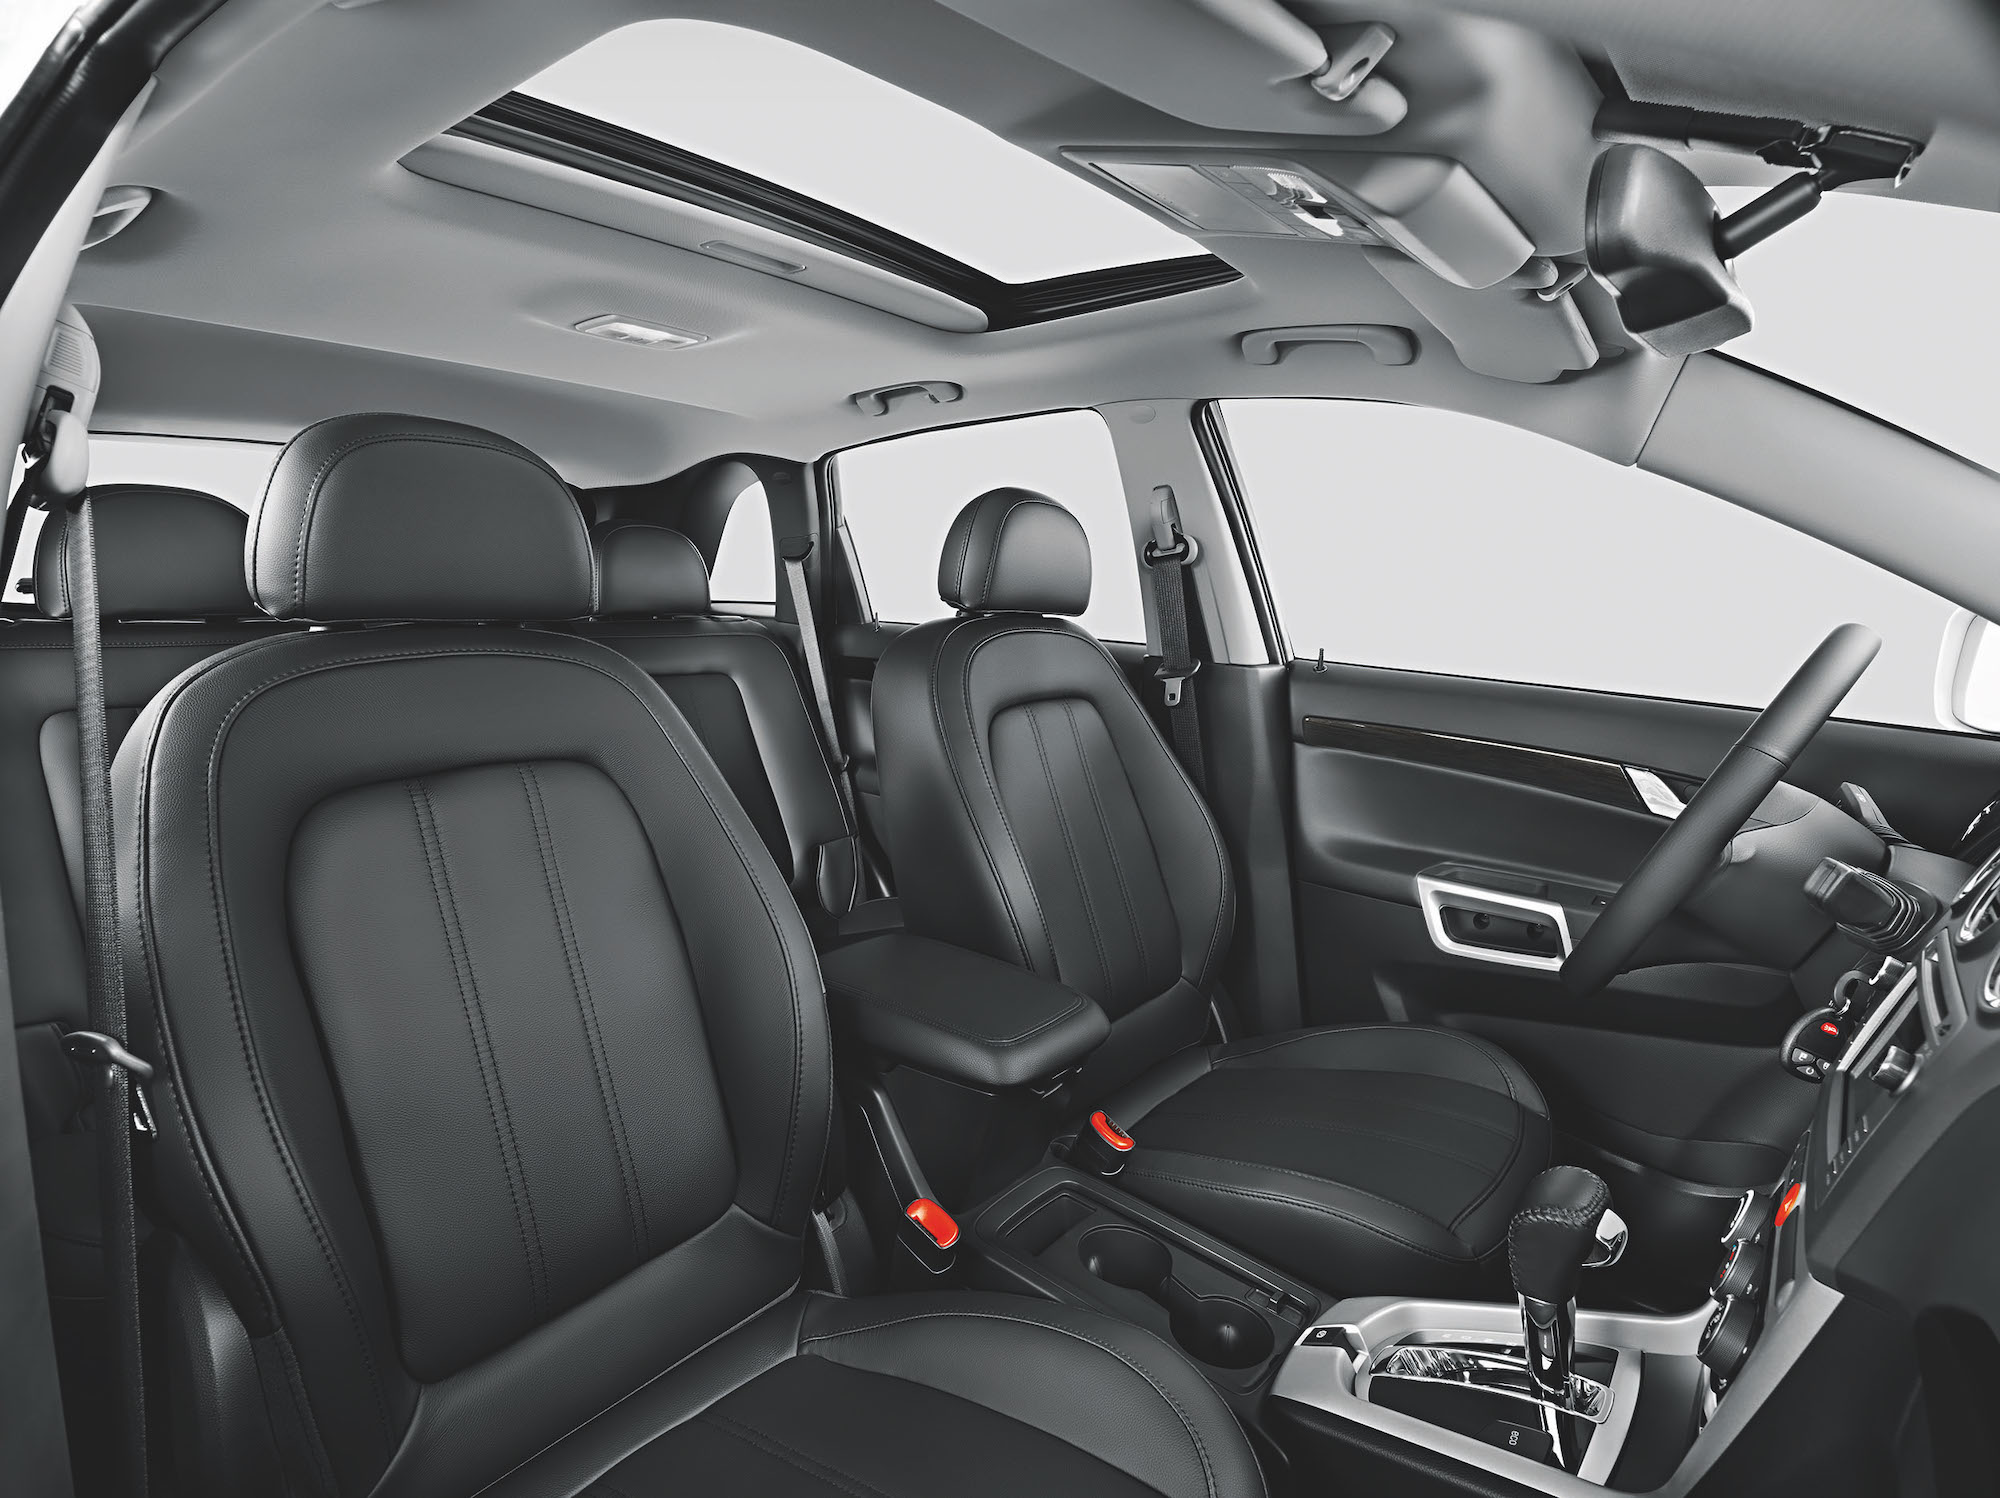 Chevrolet Captiva 2015 interior